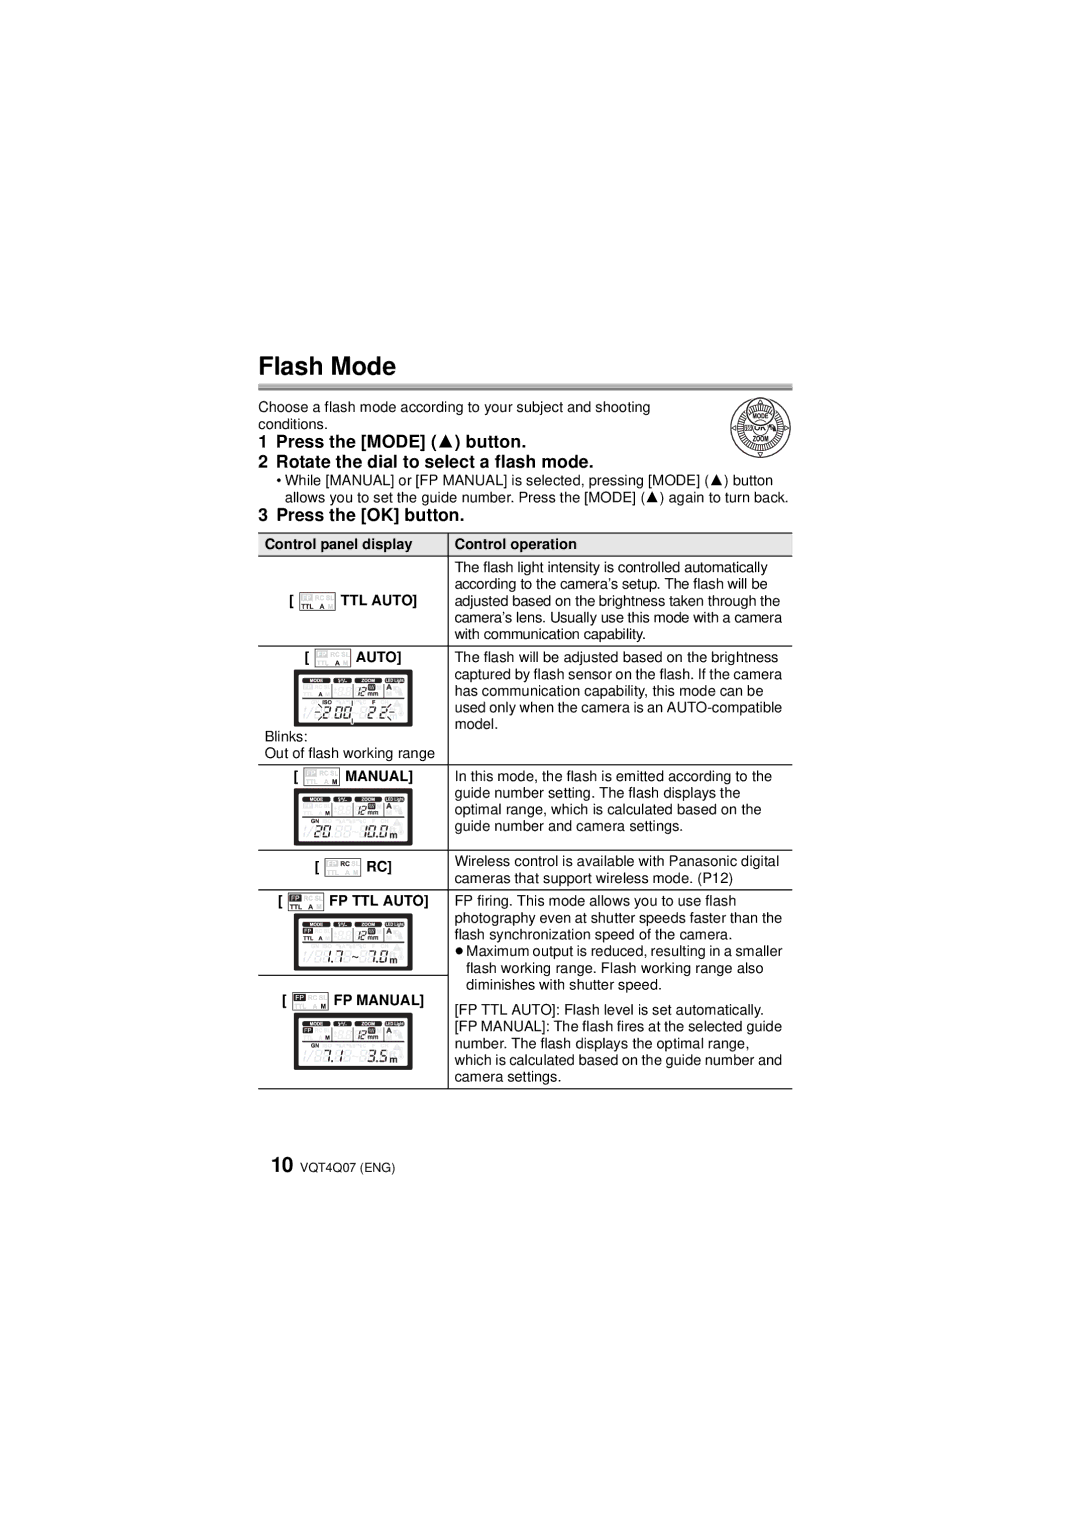 Panasonic DMW-FL360L operating instructions Flash Mode, Press the OK button 